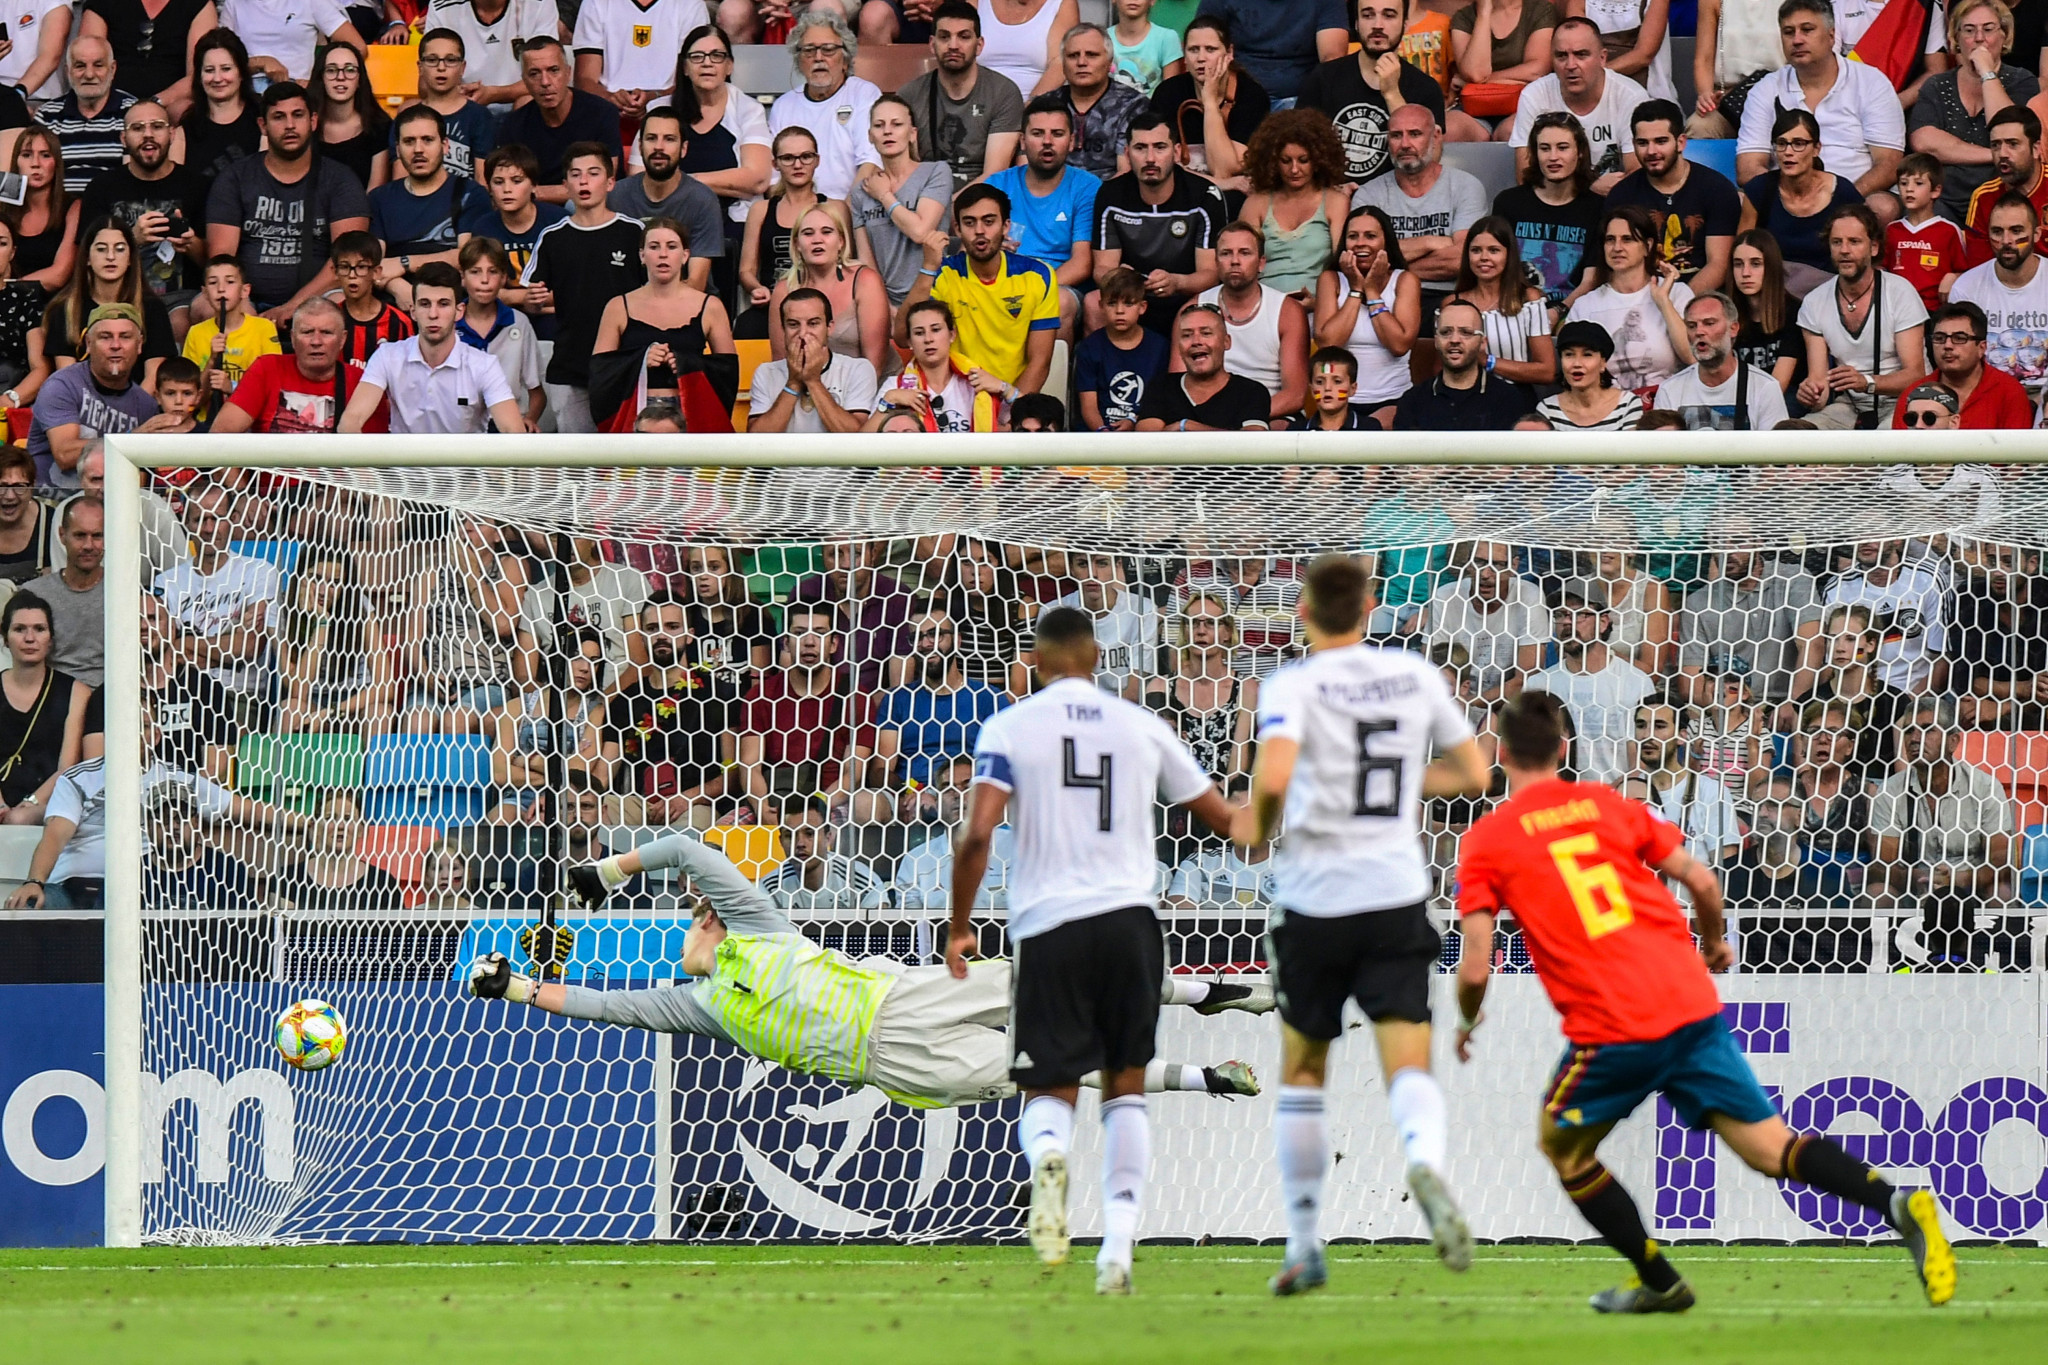 Fabian Ruiz scored Spain's opening goal in the final ©Getty Images